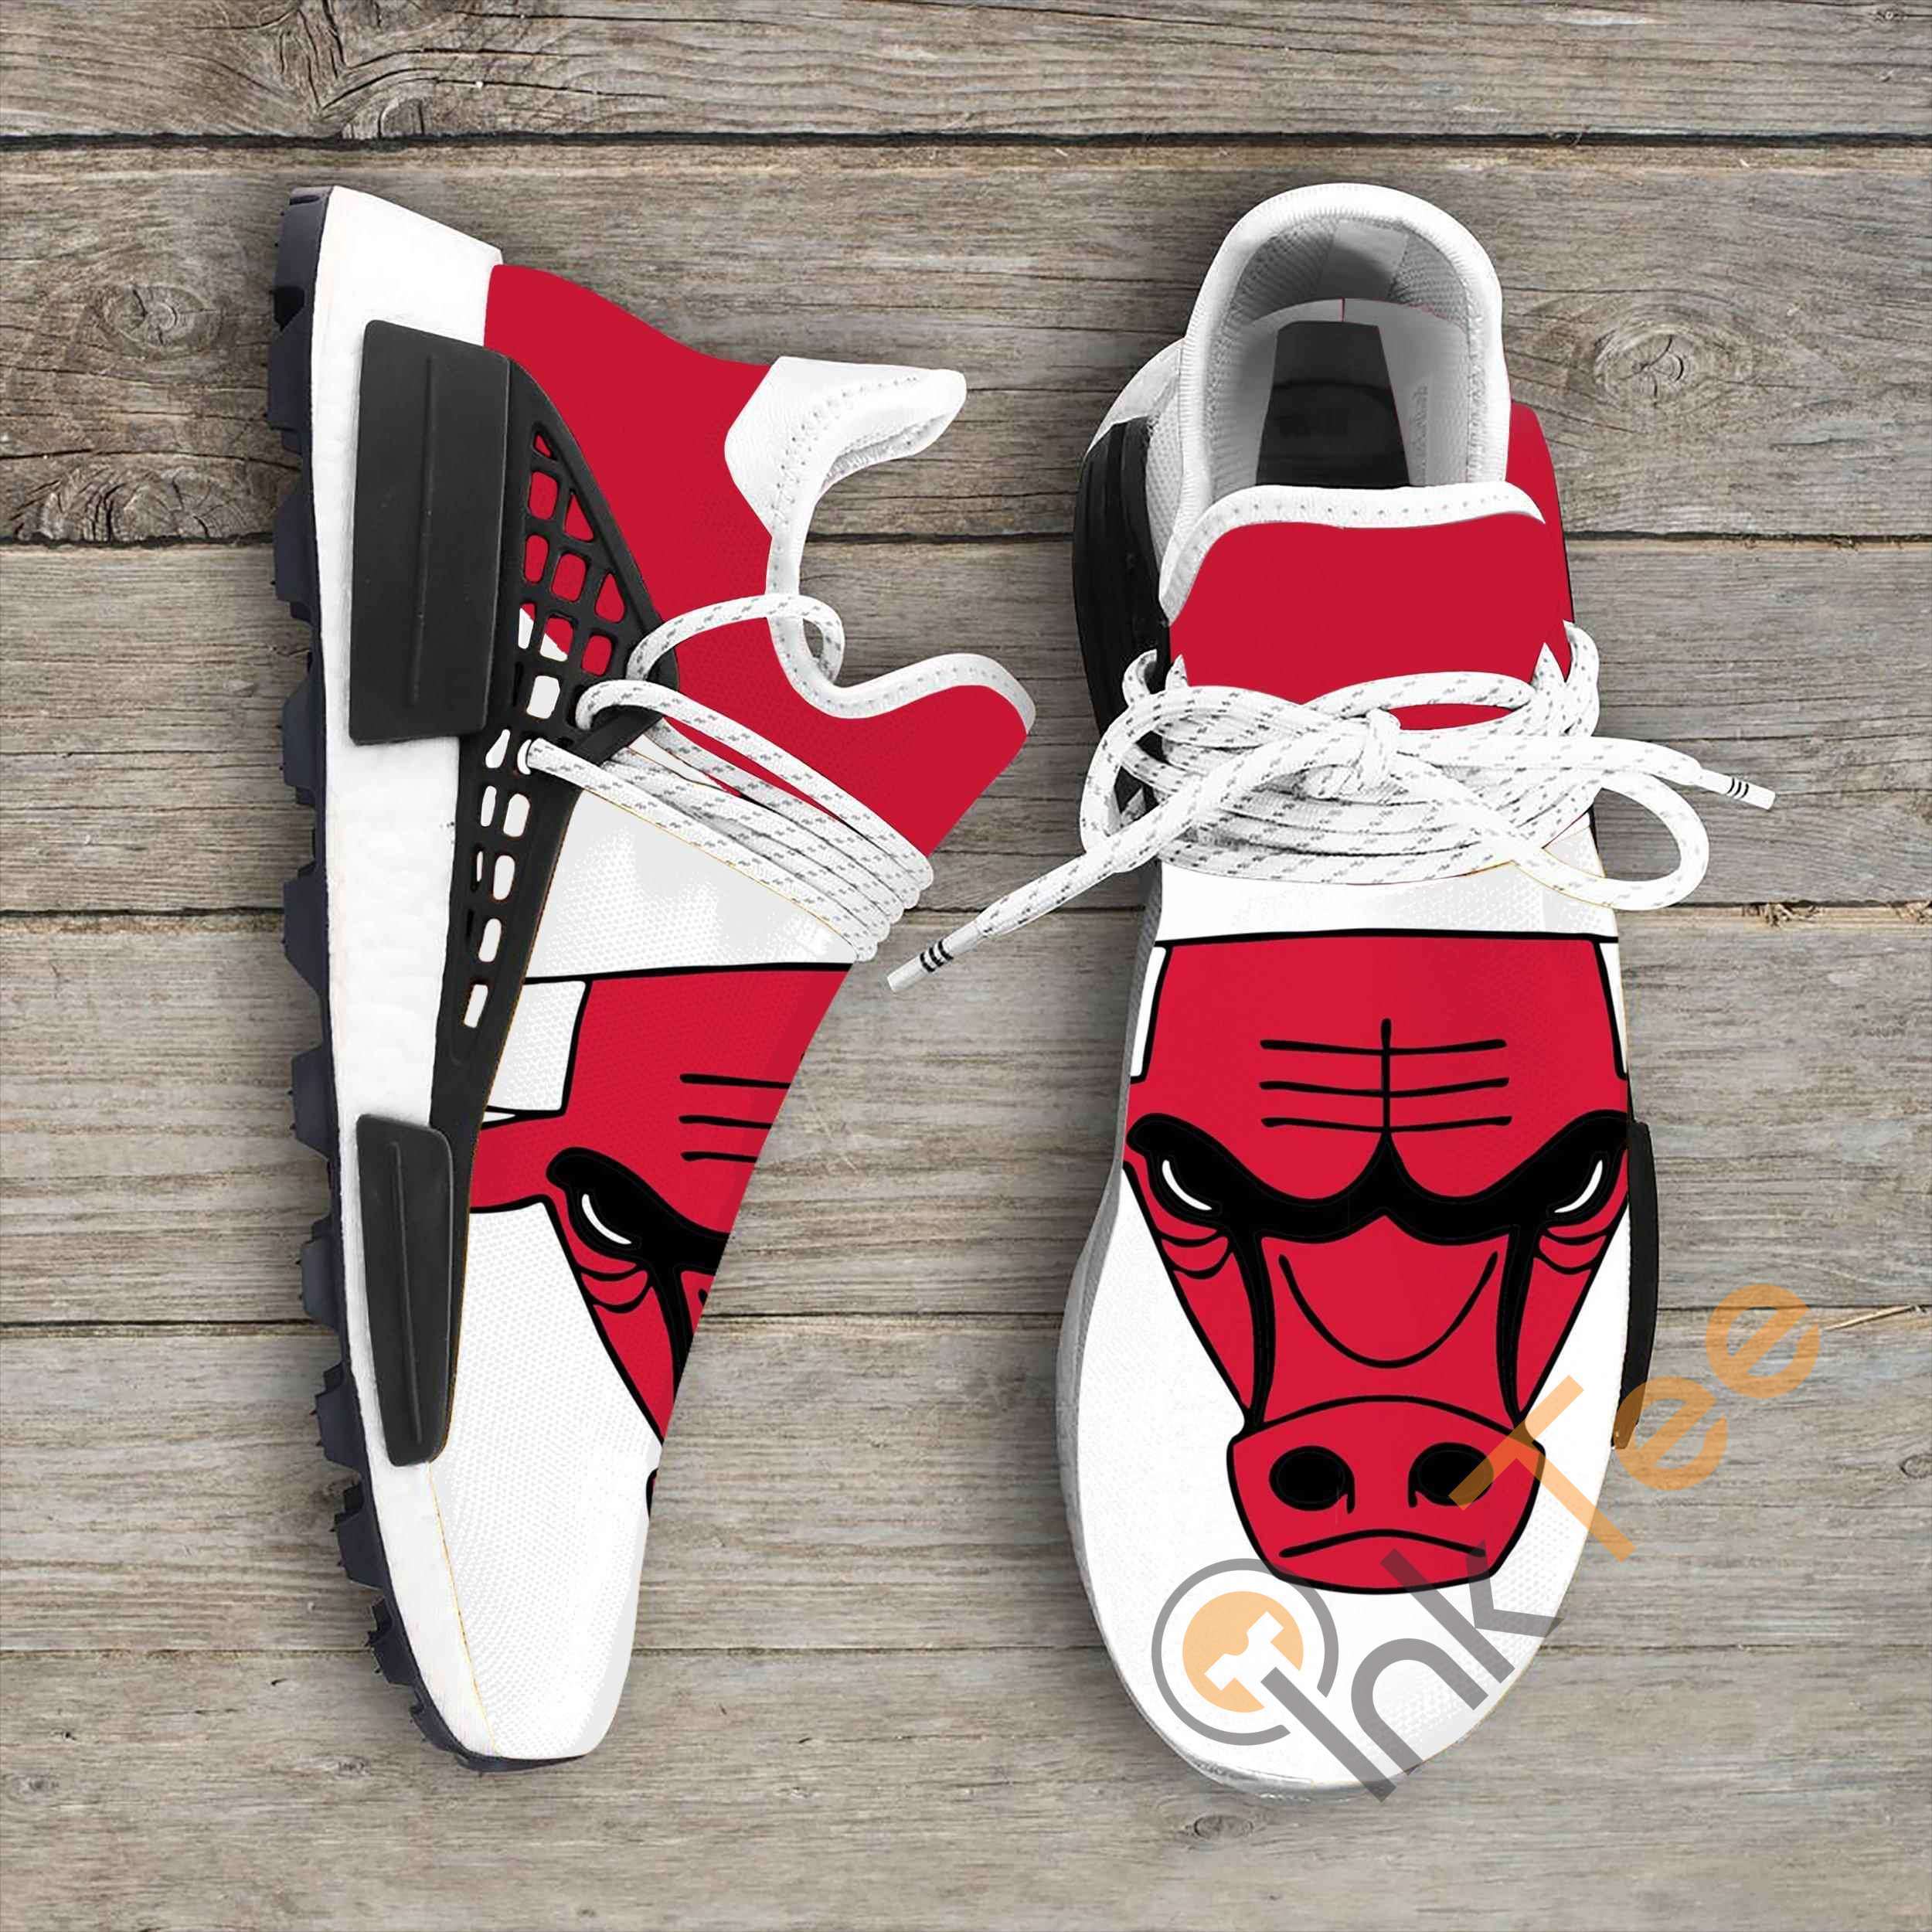 nba chicago bulls shoes